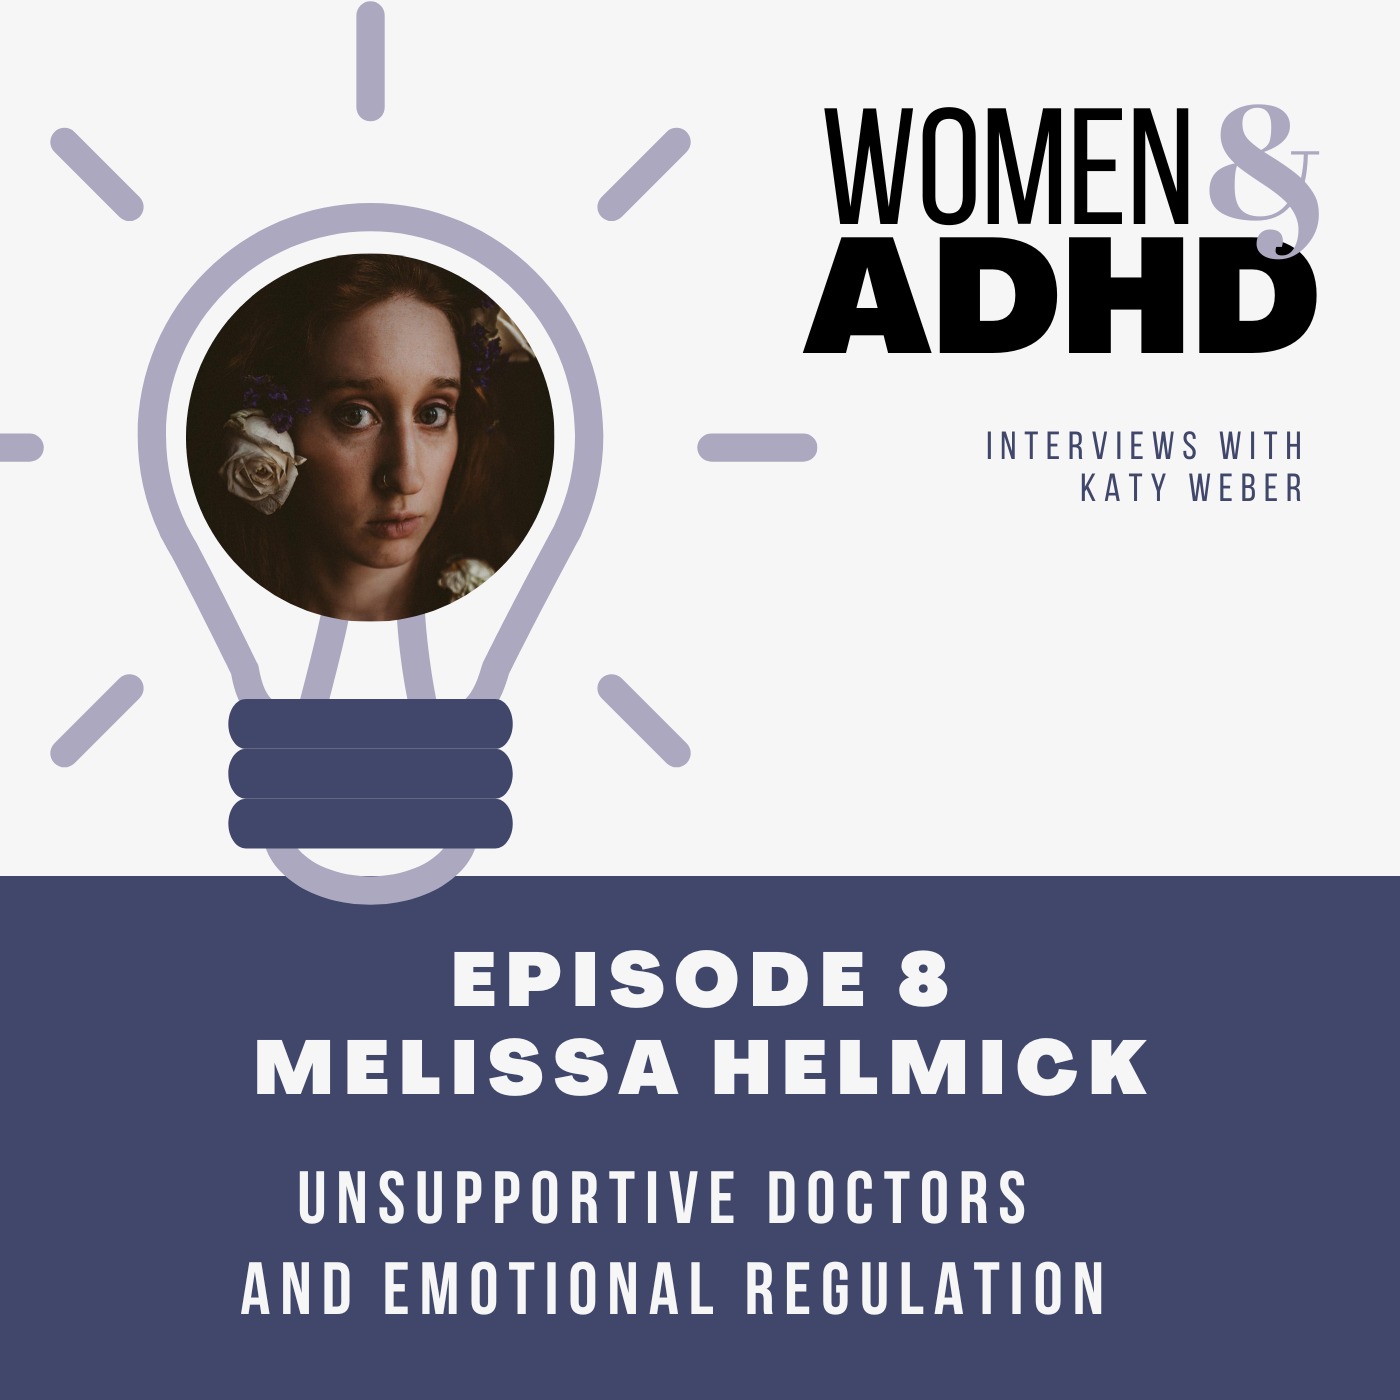 Melissa Helmick: Unsupportive doctors and emotional regulation